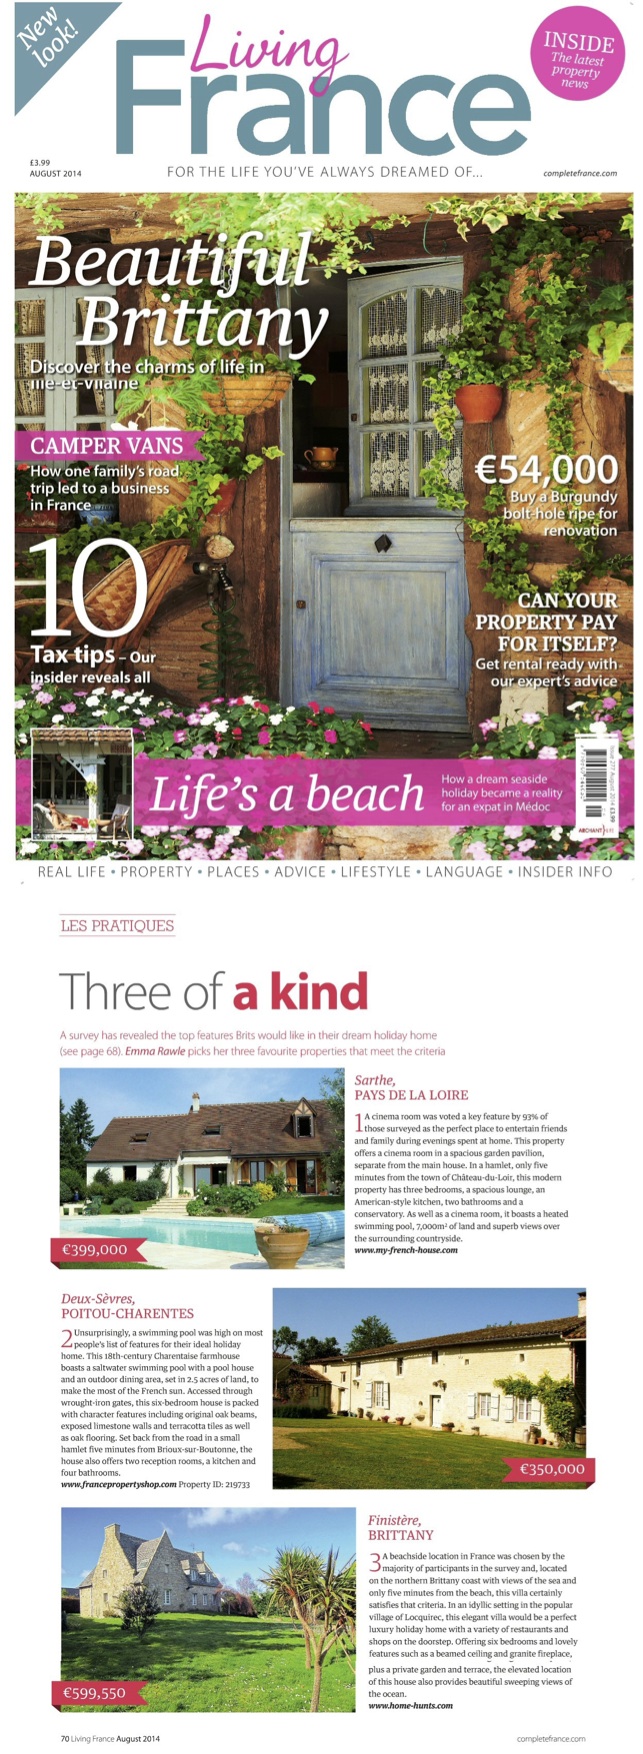 Living France Magazine – Brittany Property